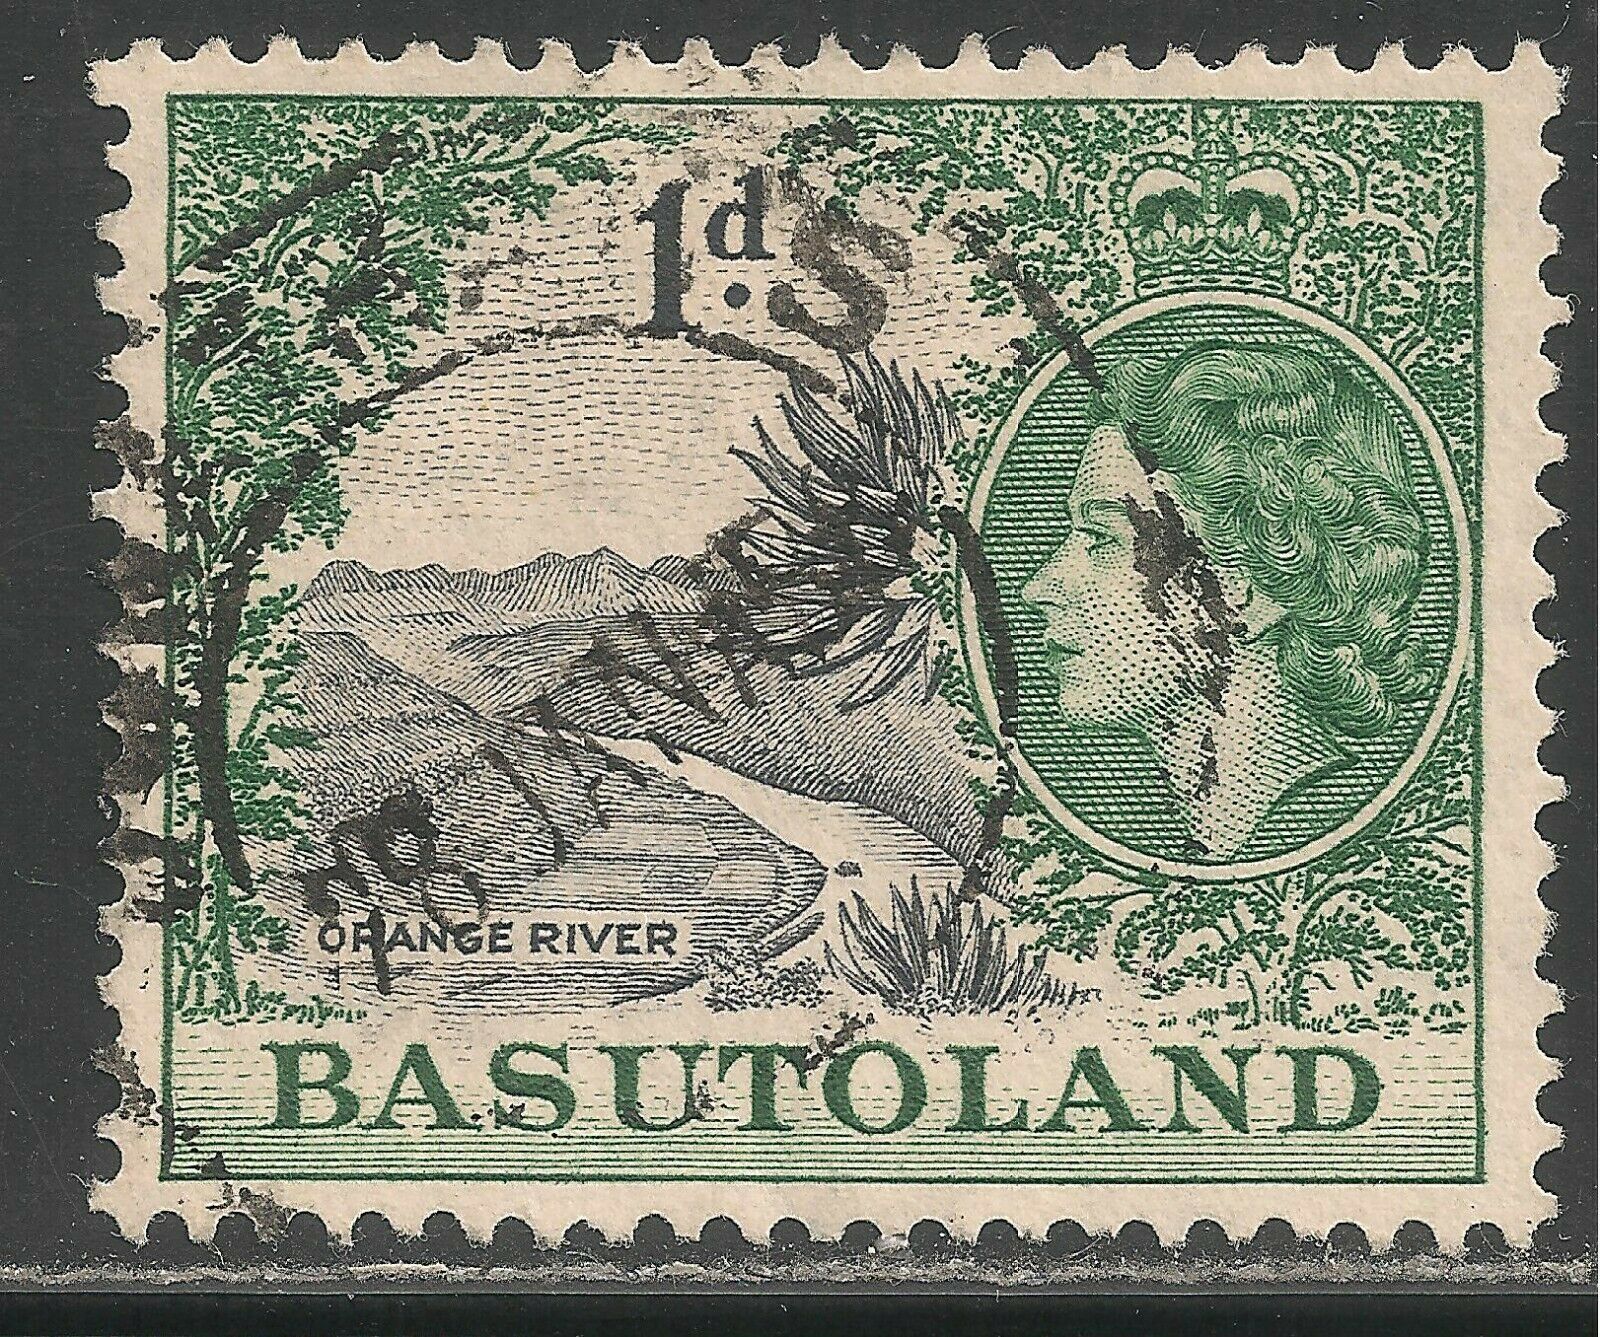 Basutoland #47 (a7) Vf Used - 1954 1p Orange River And Queen Elizabeth Ii